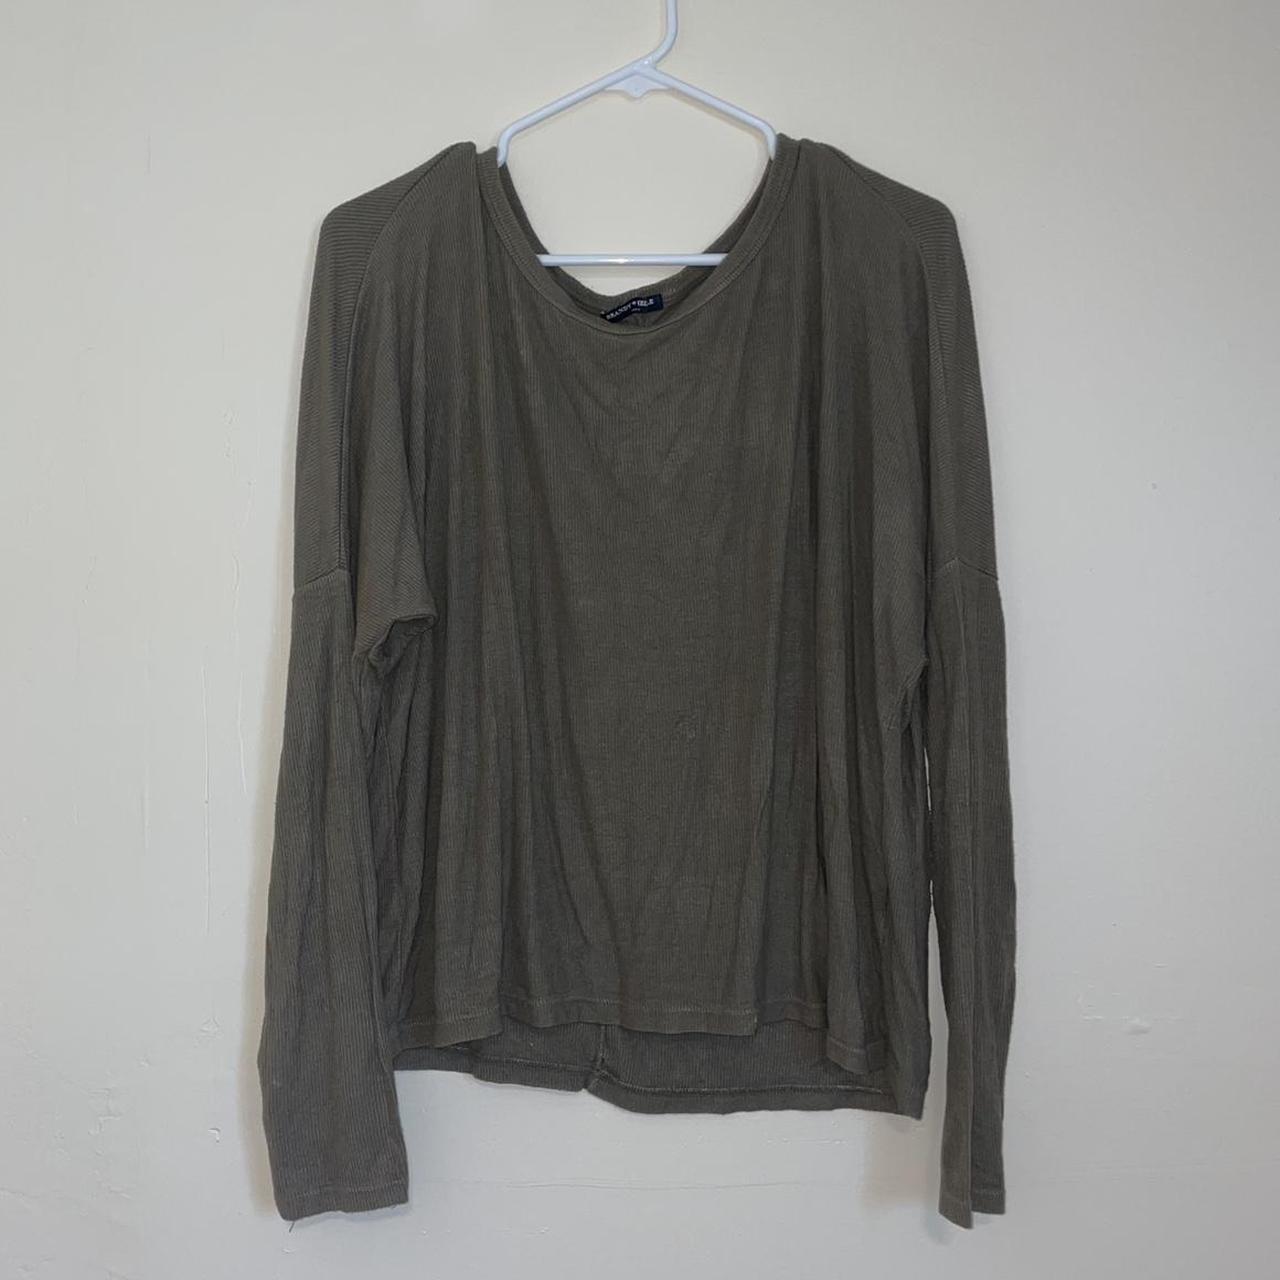 Brandy Melville Olive Green Tshirt Dress - $9 (67% Off Retail